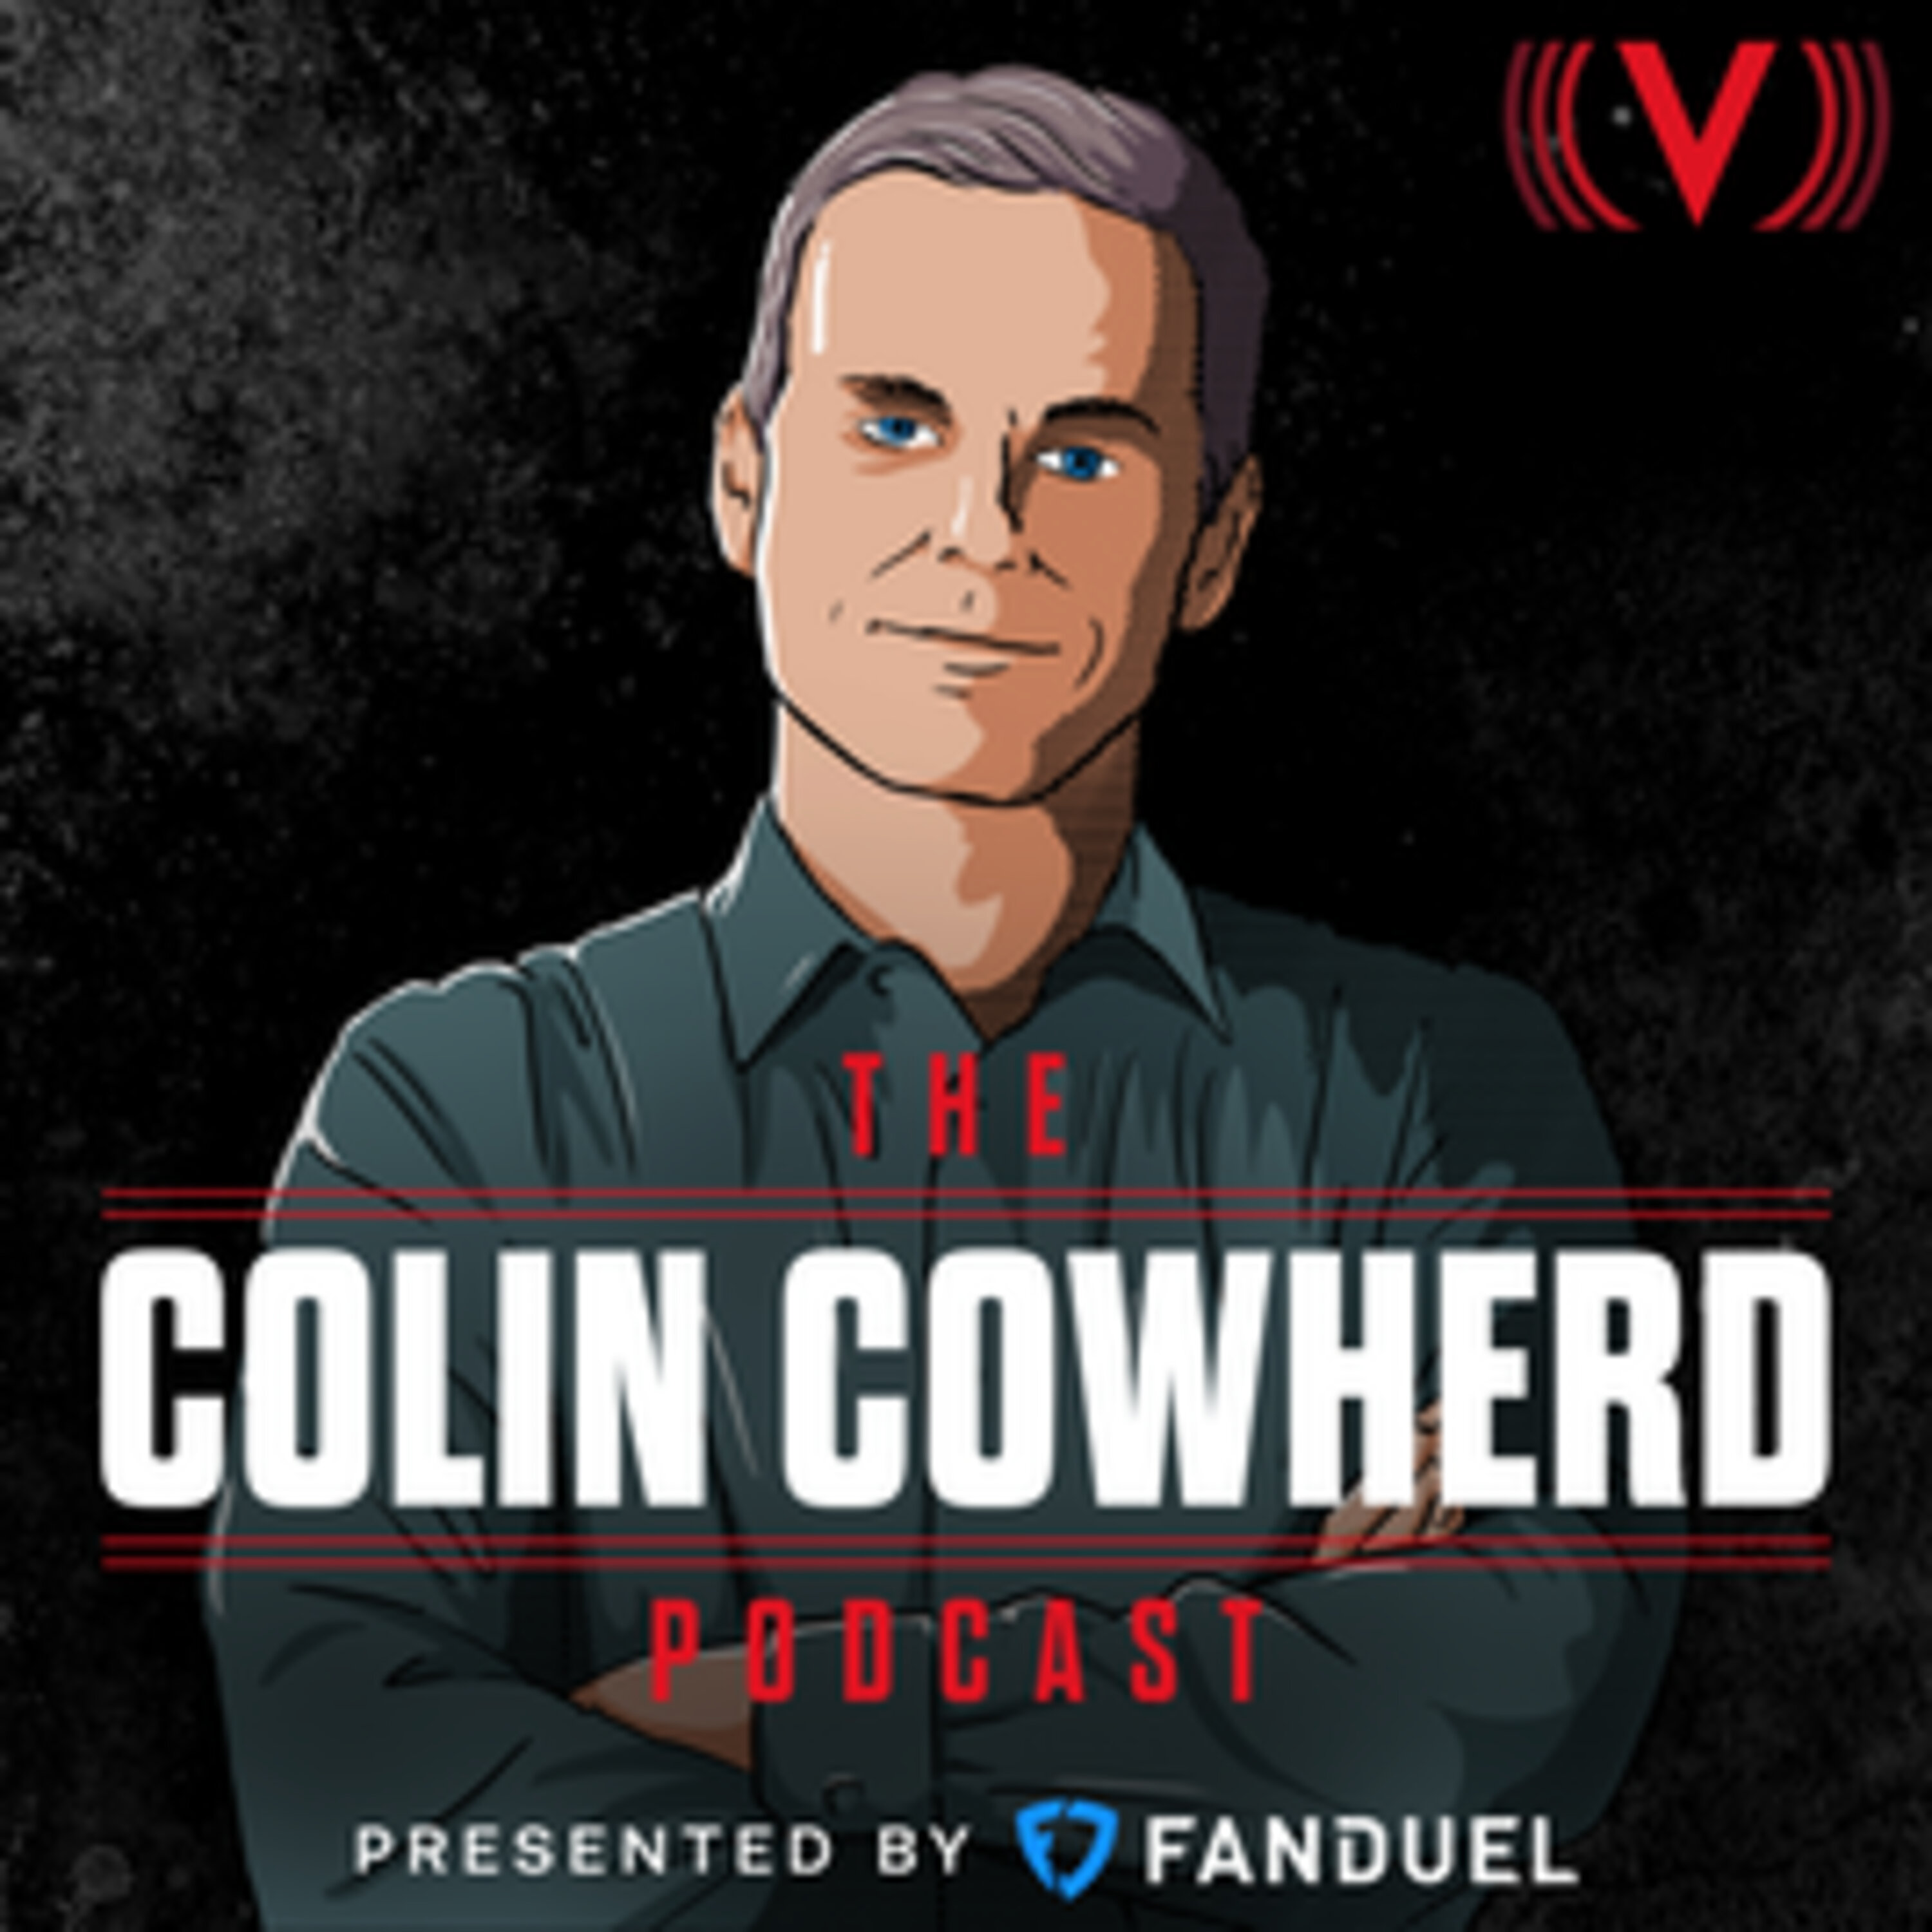 Colin Cowherd Podcast - Cooper Kupp on McVay, Stafford Chemistry, OBJ Impact